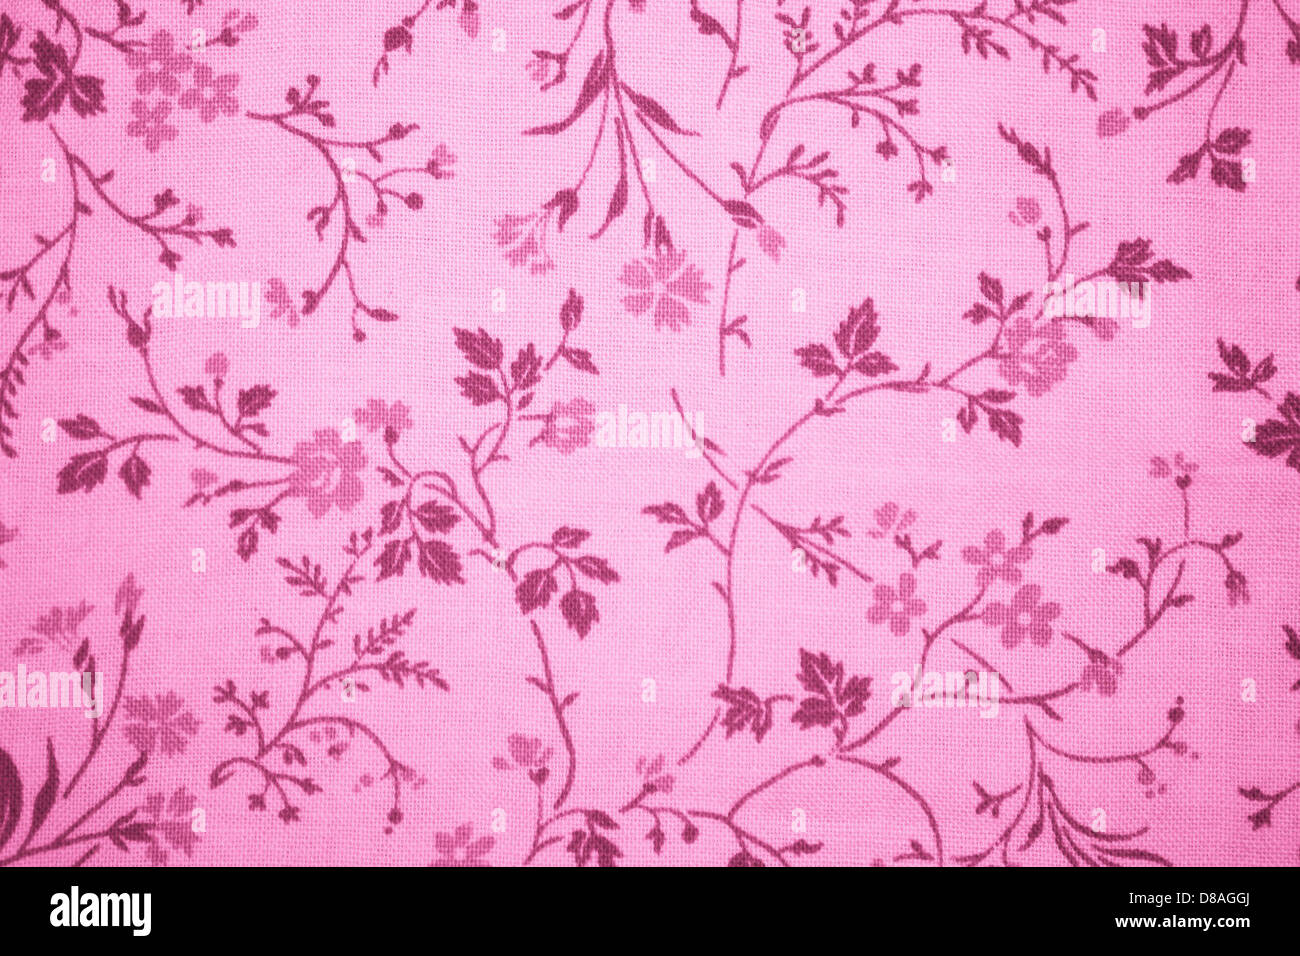 pink floral print fabric texture Stock Photo Alamy